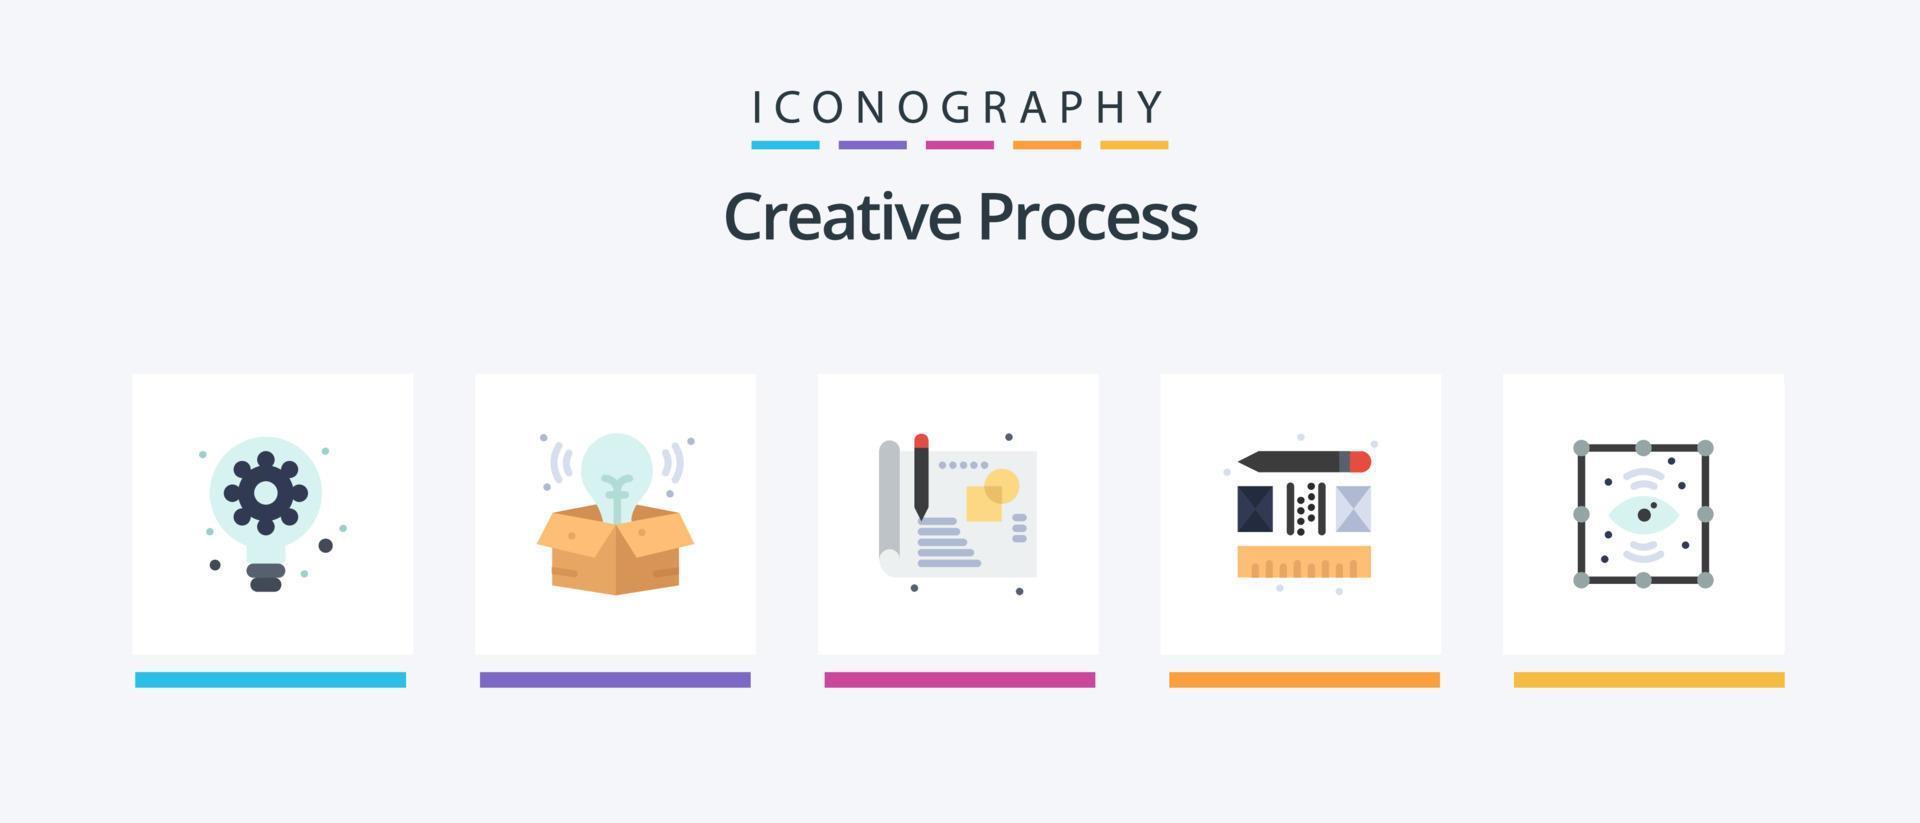 paquete de iconos flat 5 de proceso creativo que incluye . ojo. proceso. proceso. diseño. diseño de iconos creativos vector